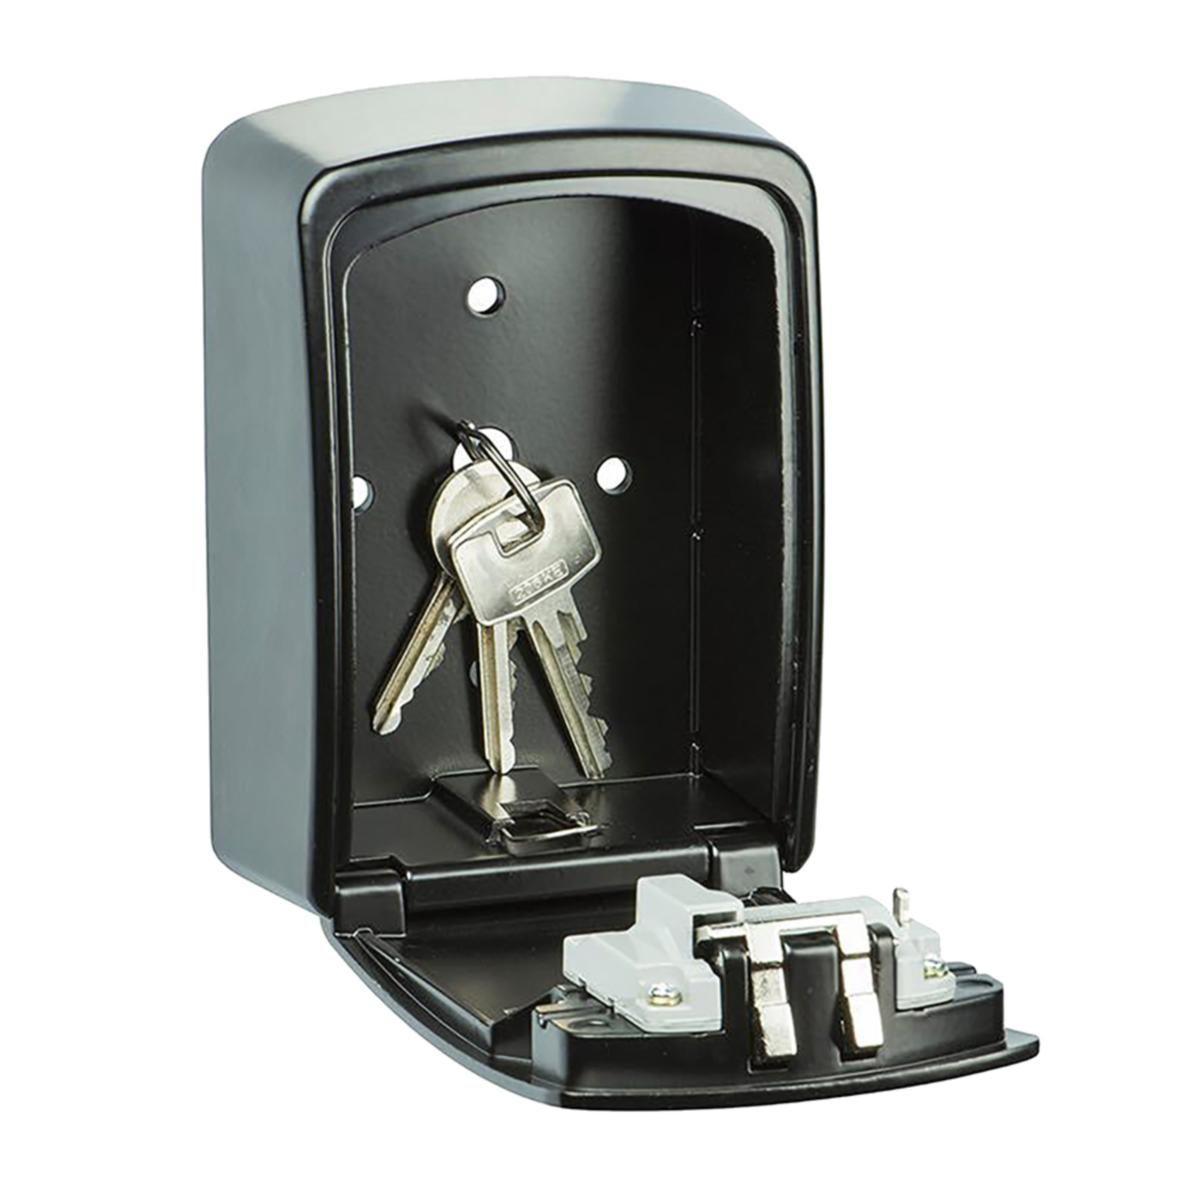 Dekton 4 Digit Combination Key Safe Box - Choice Stores